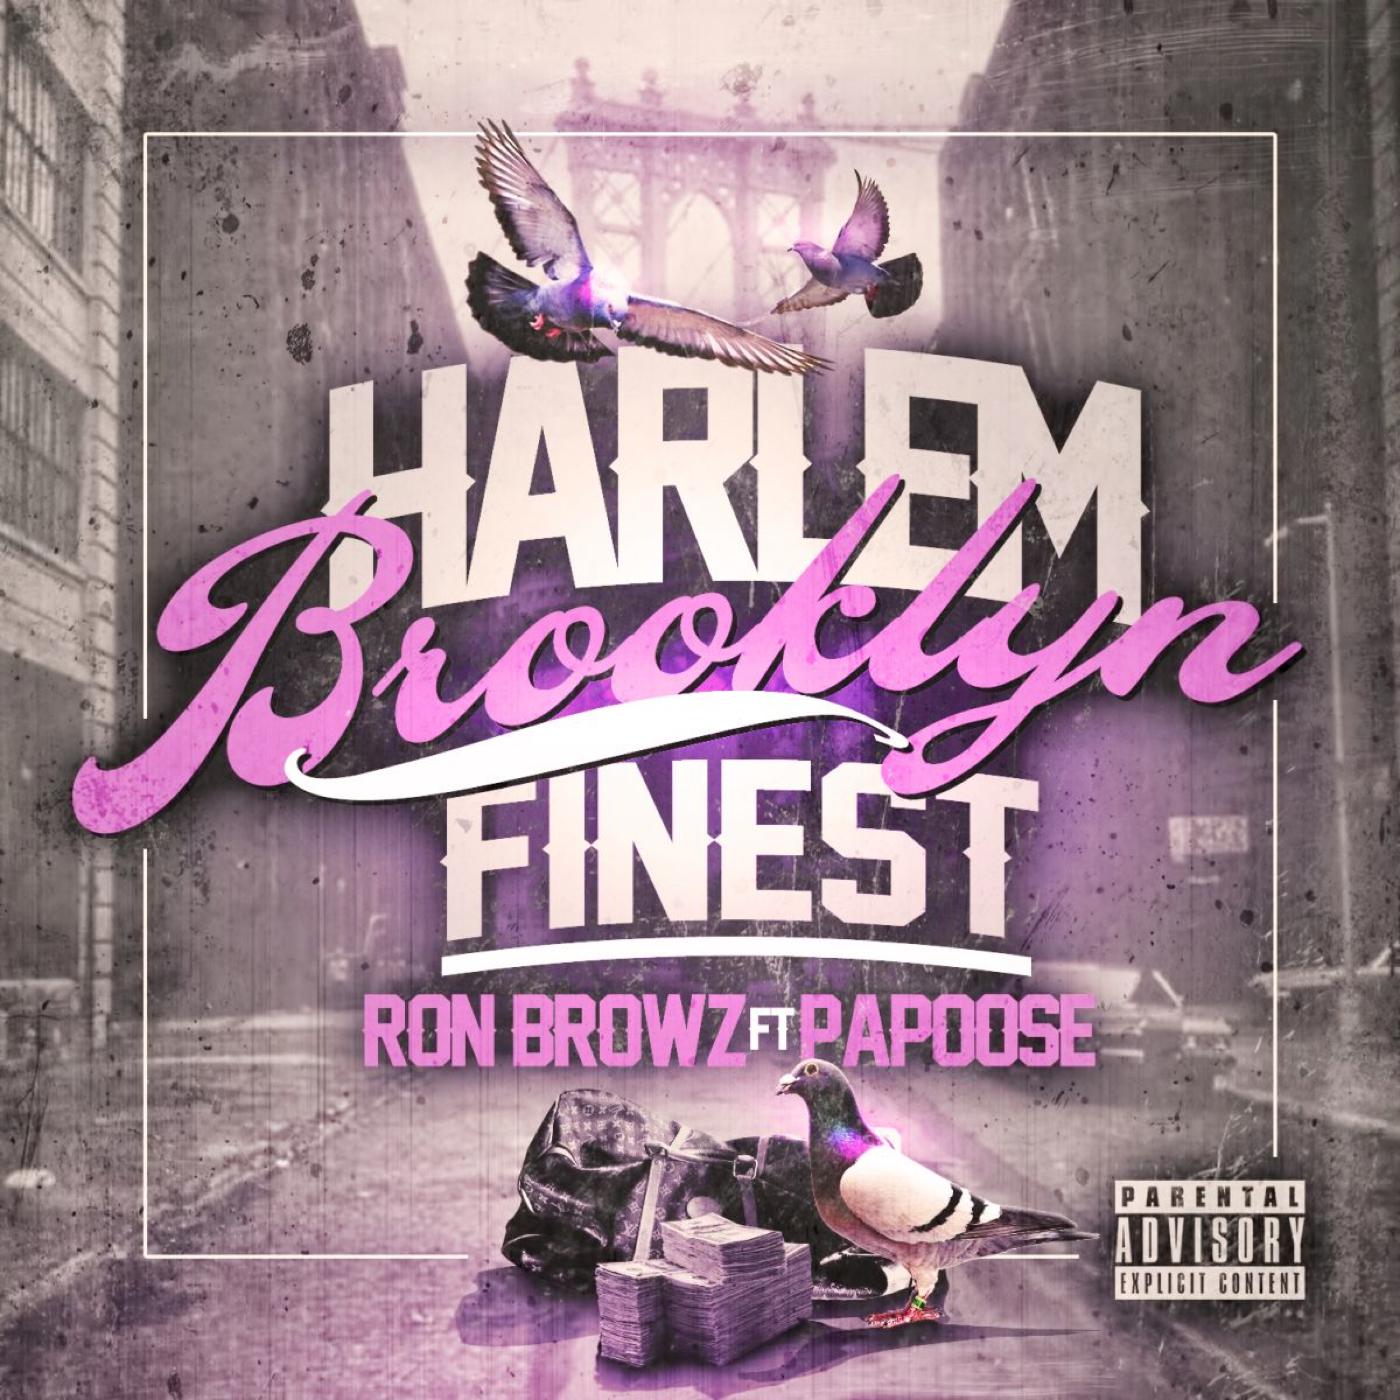 Harlem Brooklyn Finest